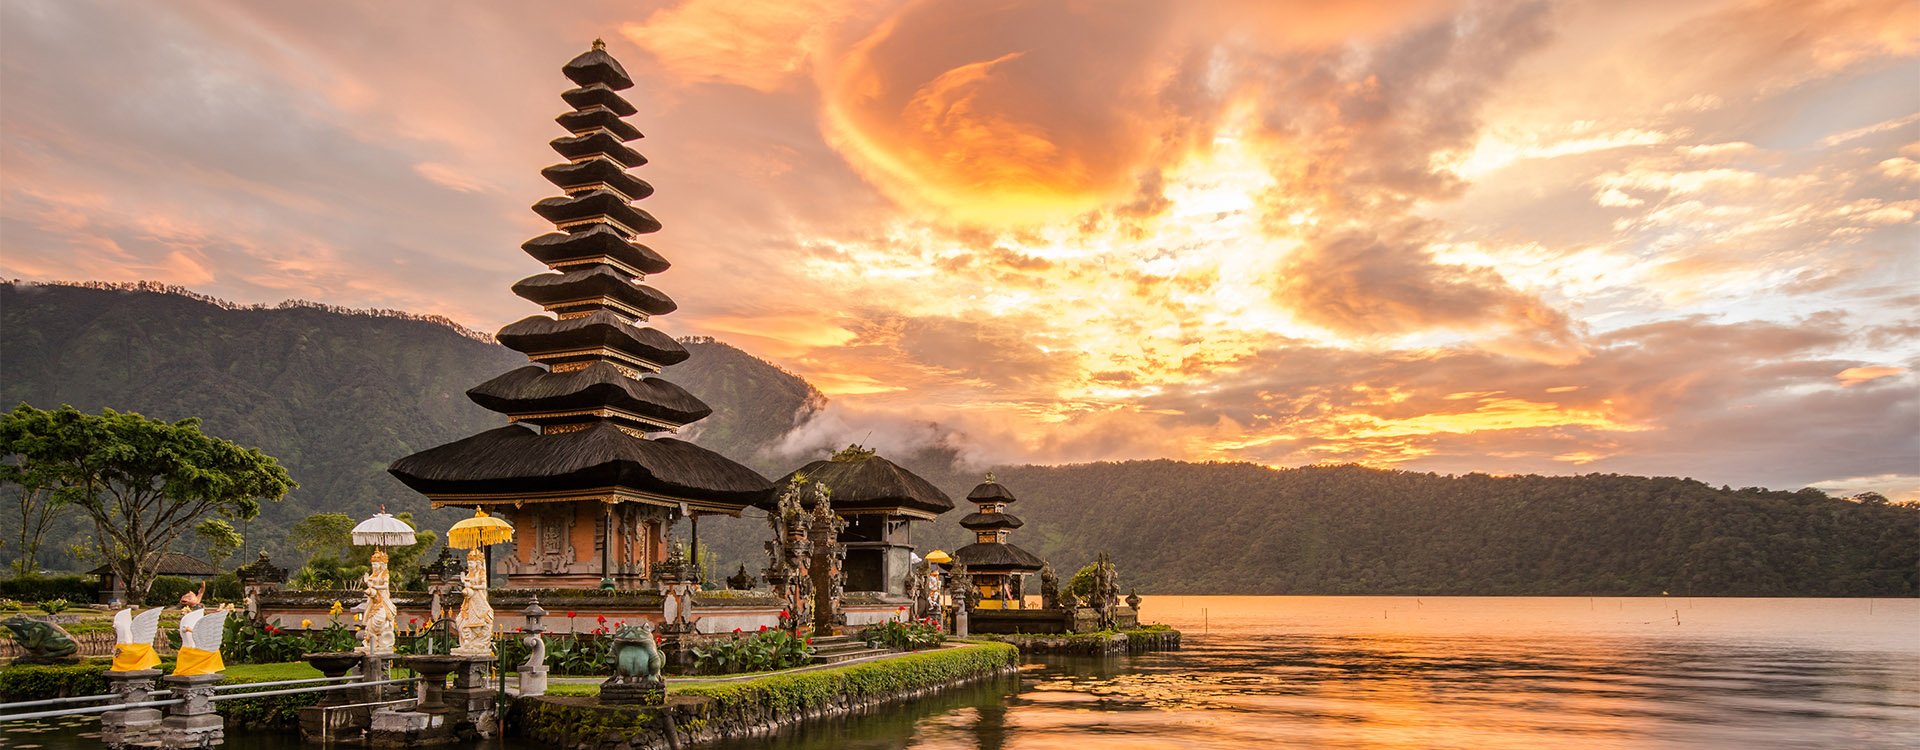 Pura Ulun Danu Bratan, Hindu temple on Bratan lake landscape, Bali, Indonesia